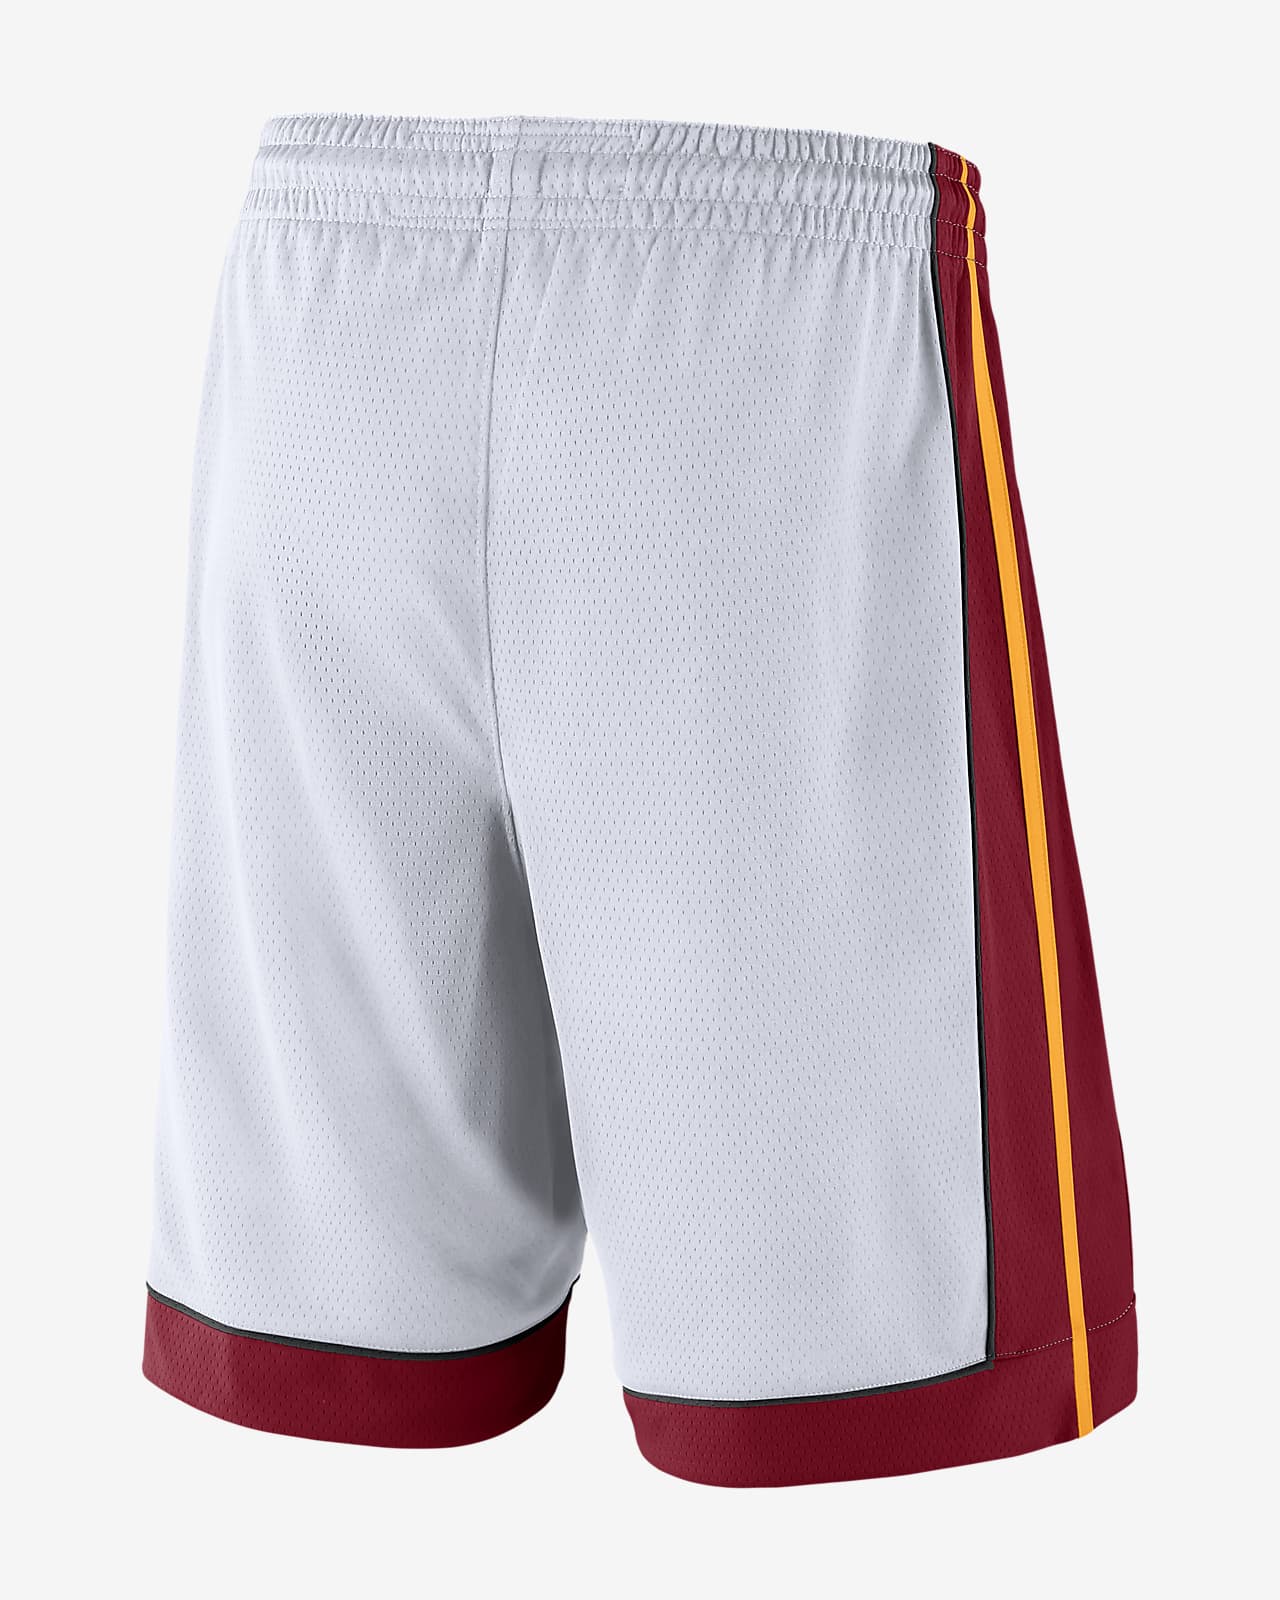 Miami Heat Nike NBA Authentics Dri-Fit Short Sleeve Shirt Men's